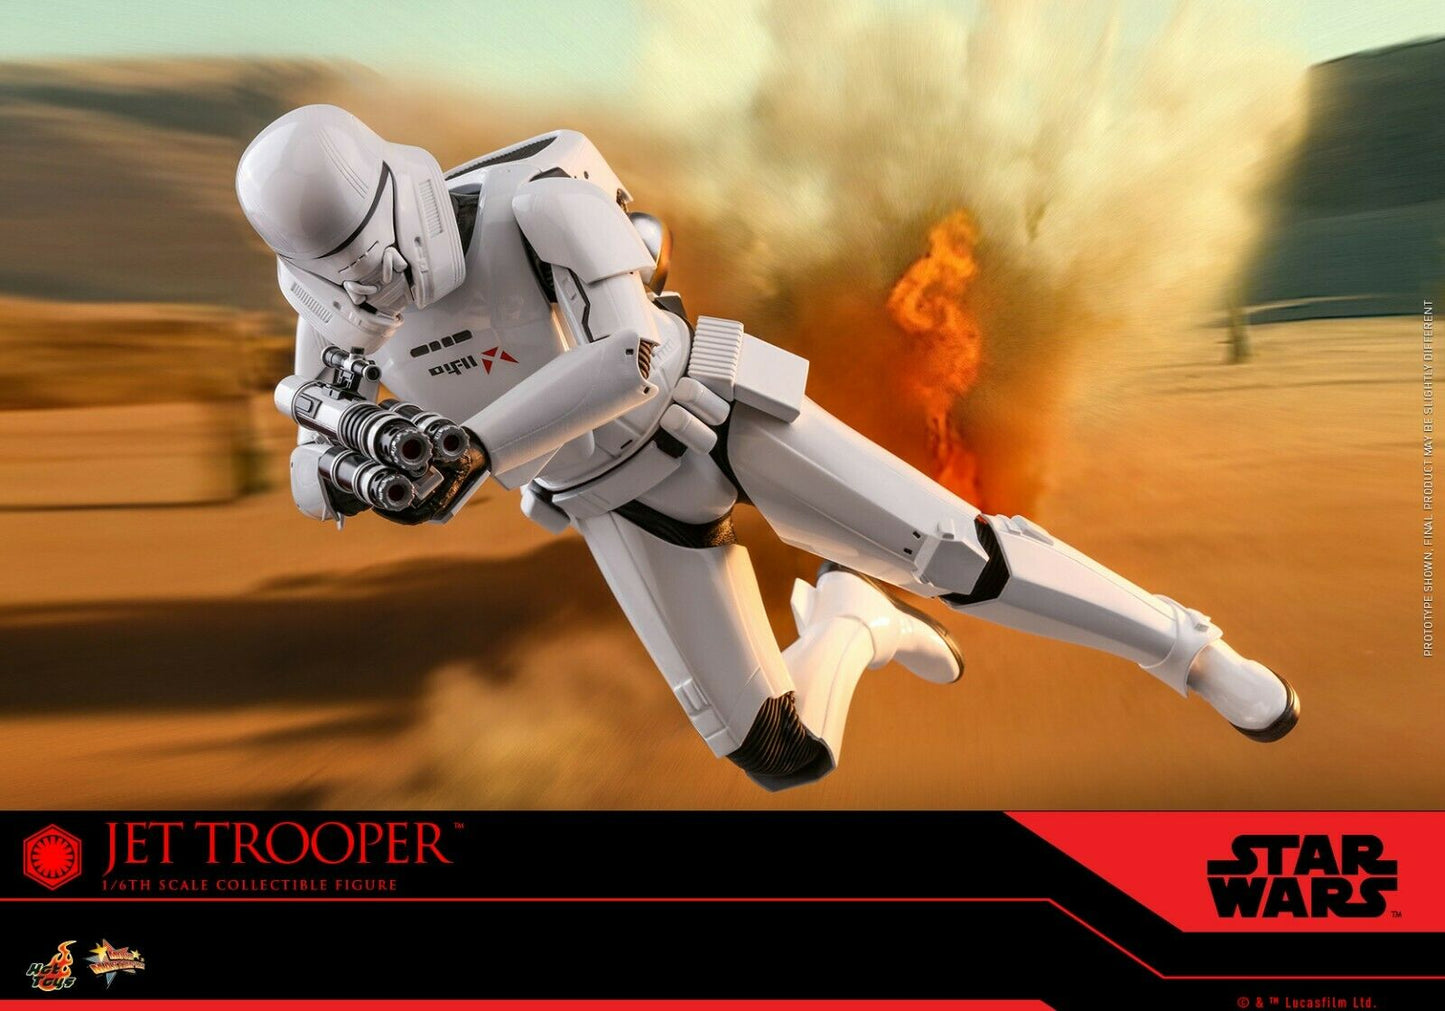 Pedido Figura Jet Trooper - Star Wars The Rise of Skywalker marca Hot Toys MMS561 escala 1/6